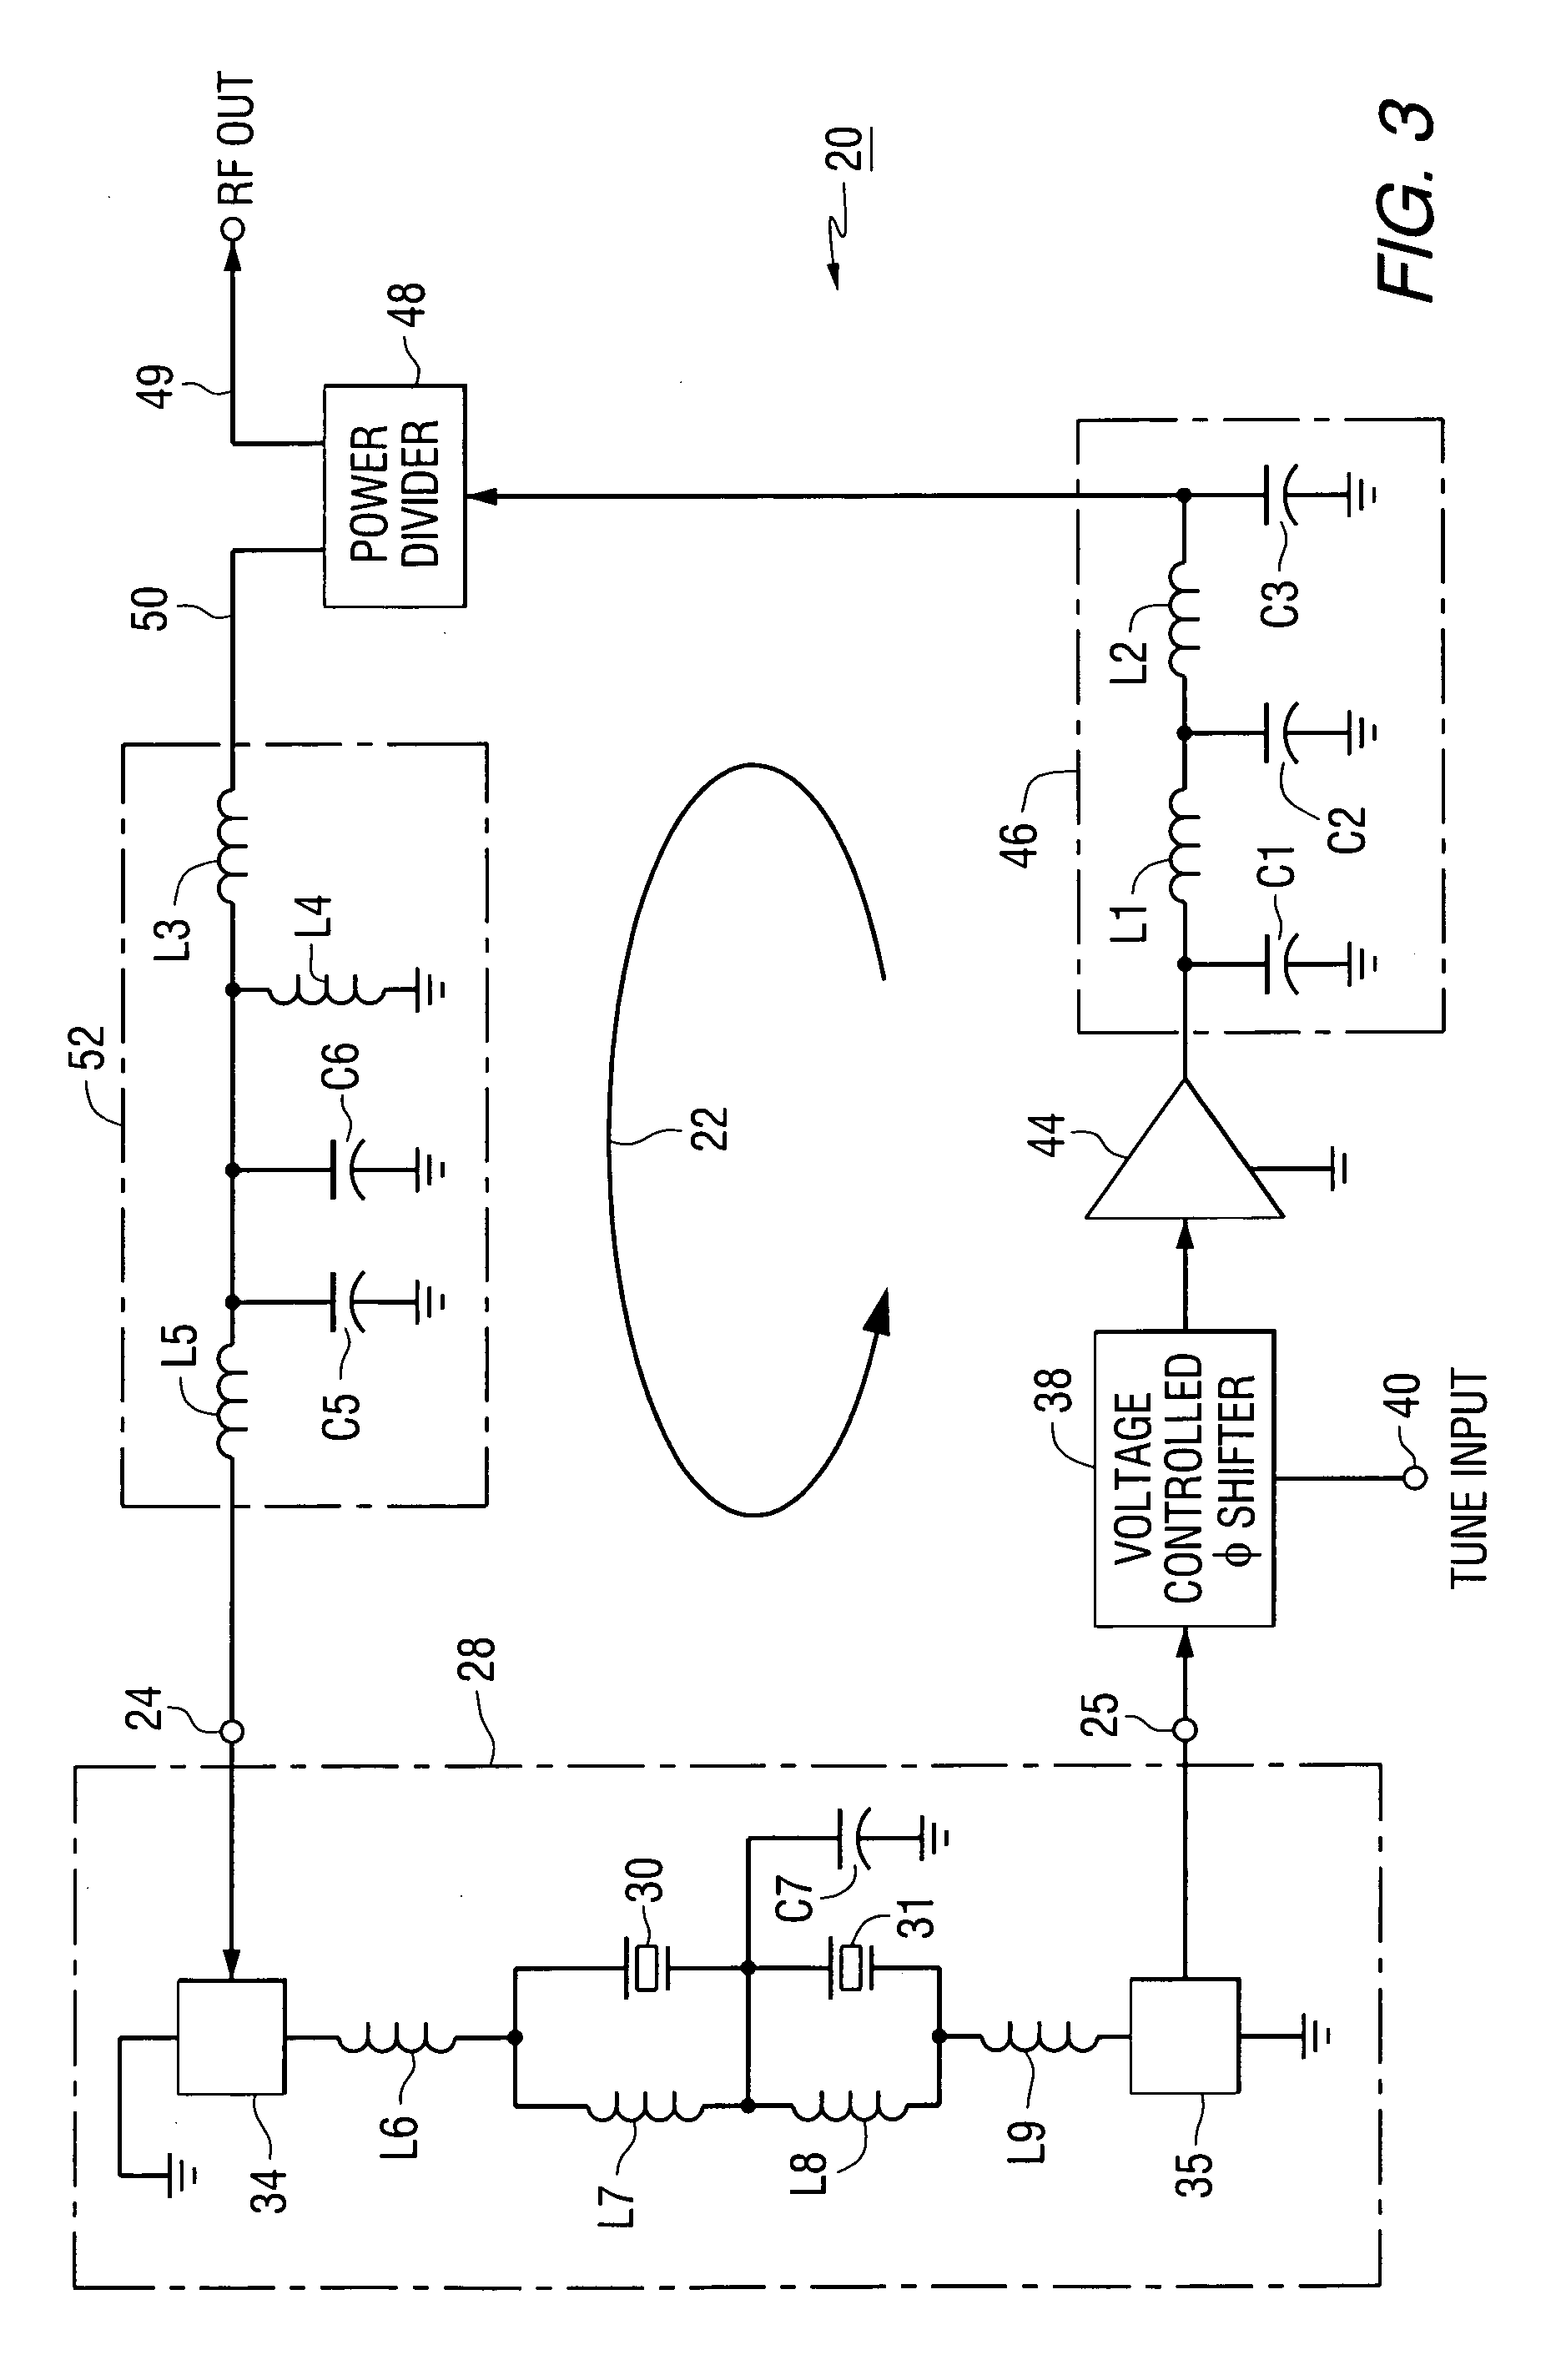 Crystal oscillator with wide tuning range